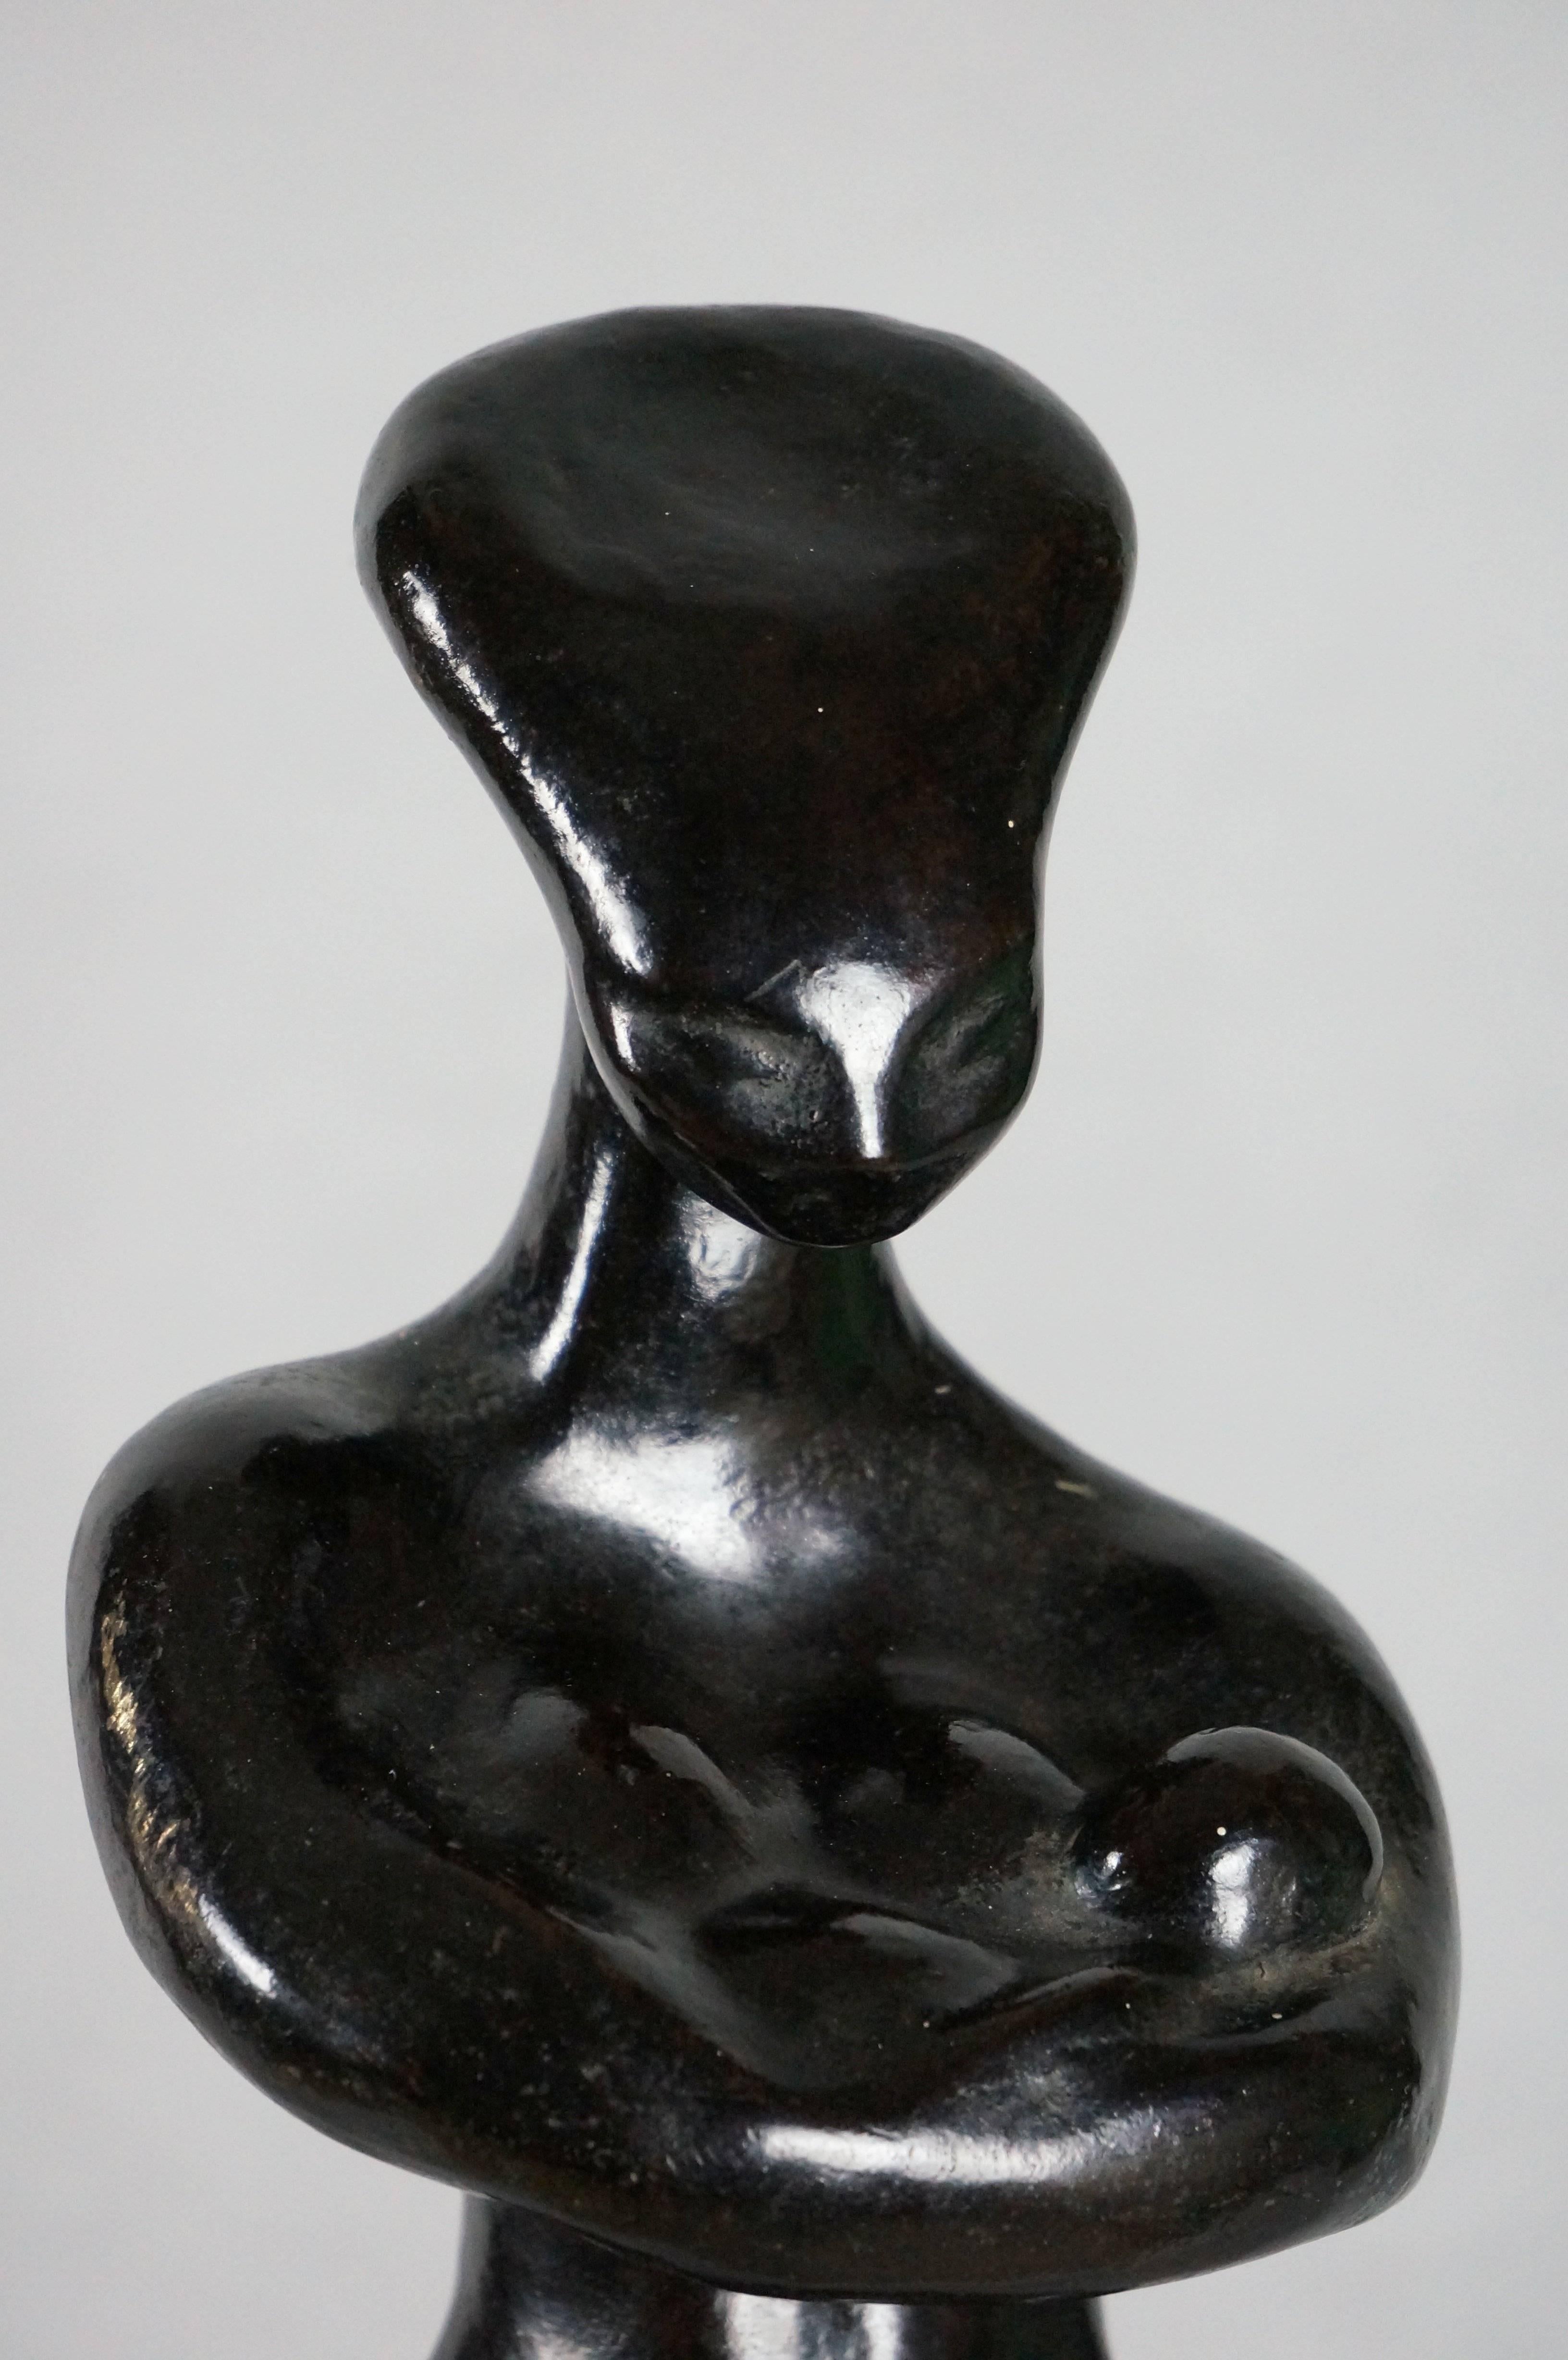 Maternity, 1960-70 - bronze, 44x13 cm - Gray Figurative Sculpture by Philippe Asselin